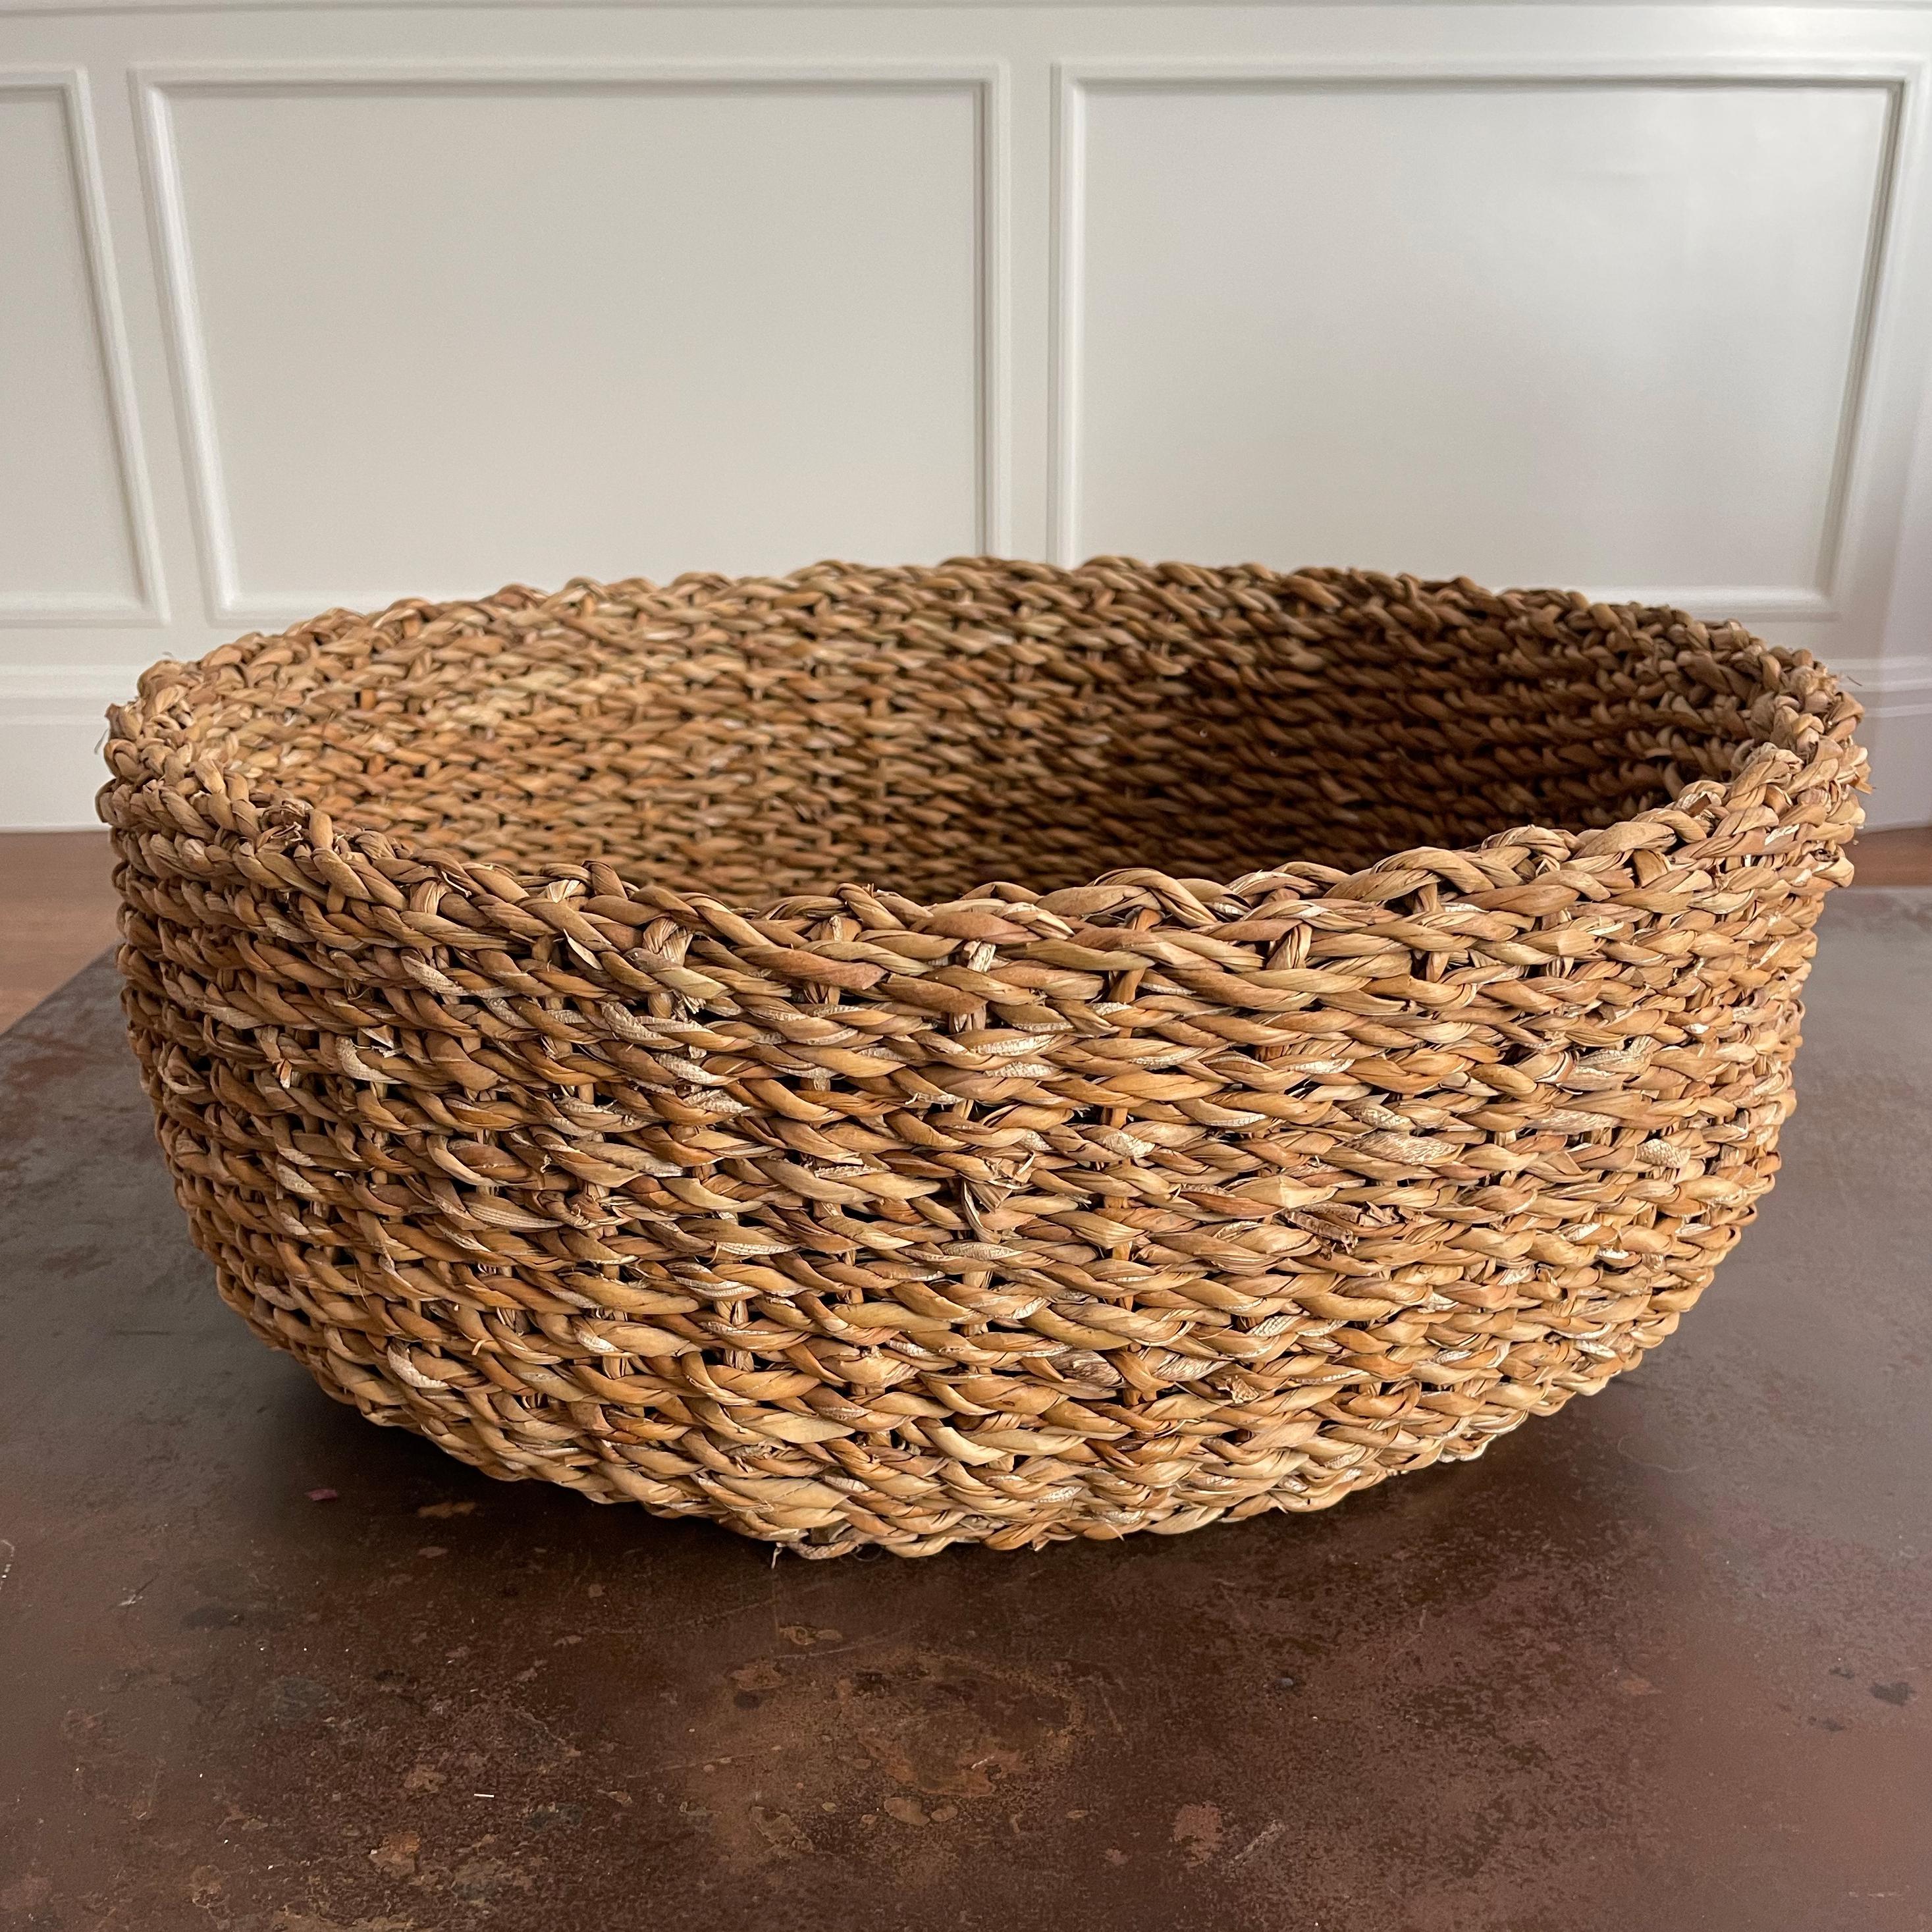 Medium natural fiber woven basket flexible in form.

Dimensions:
- 16